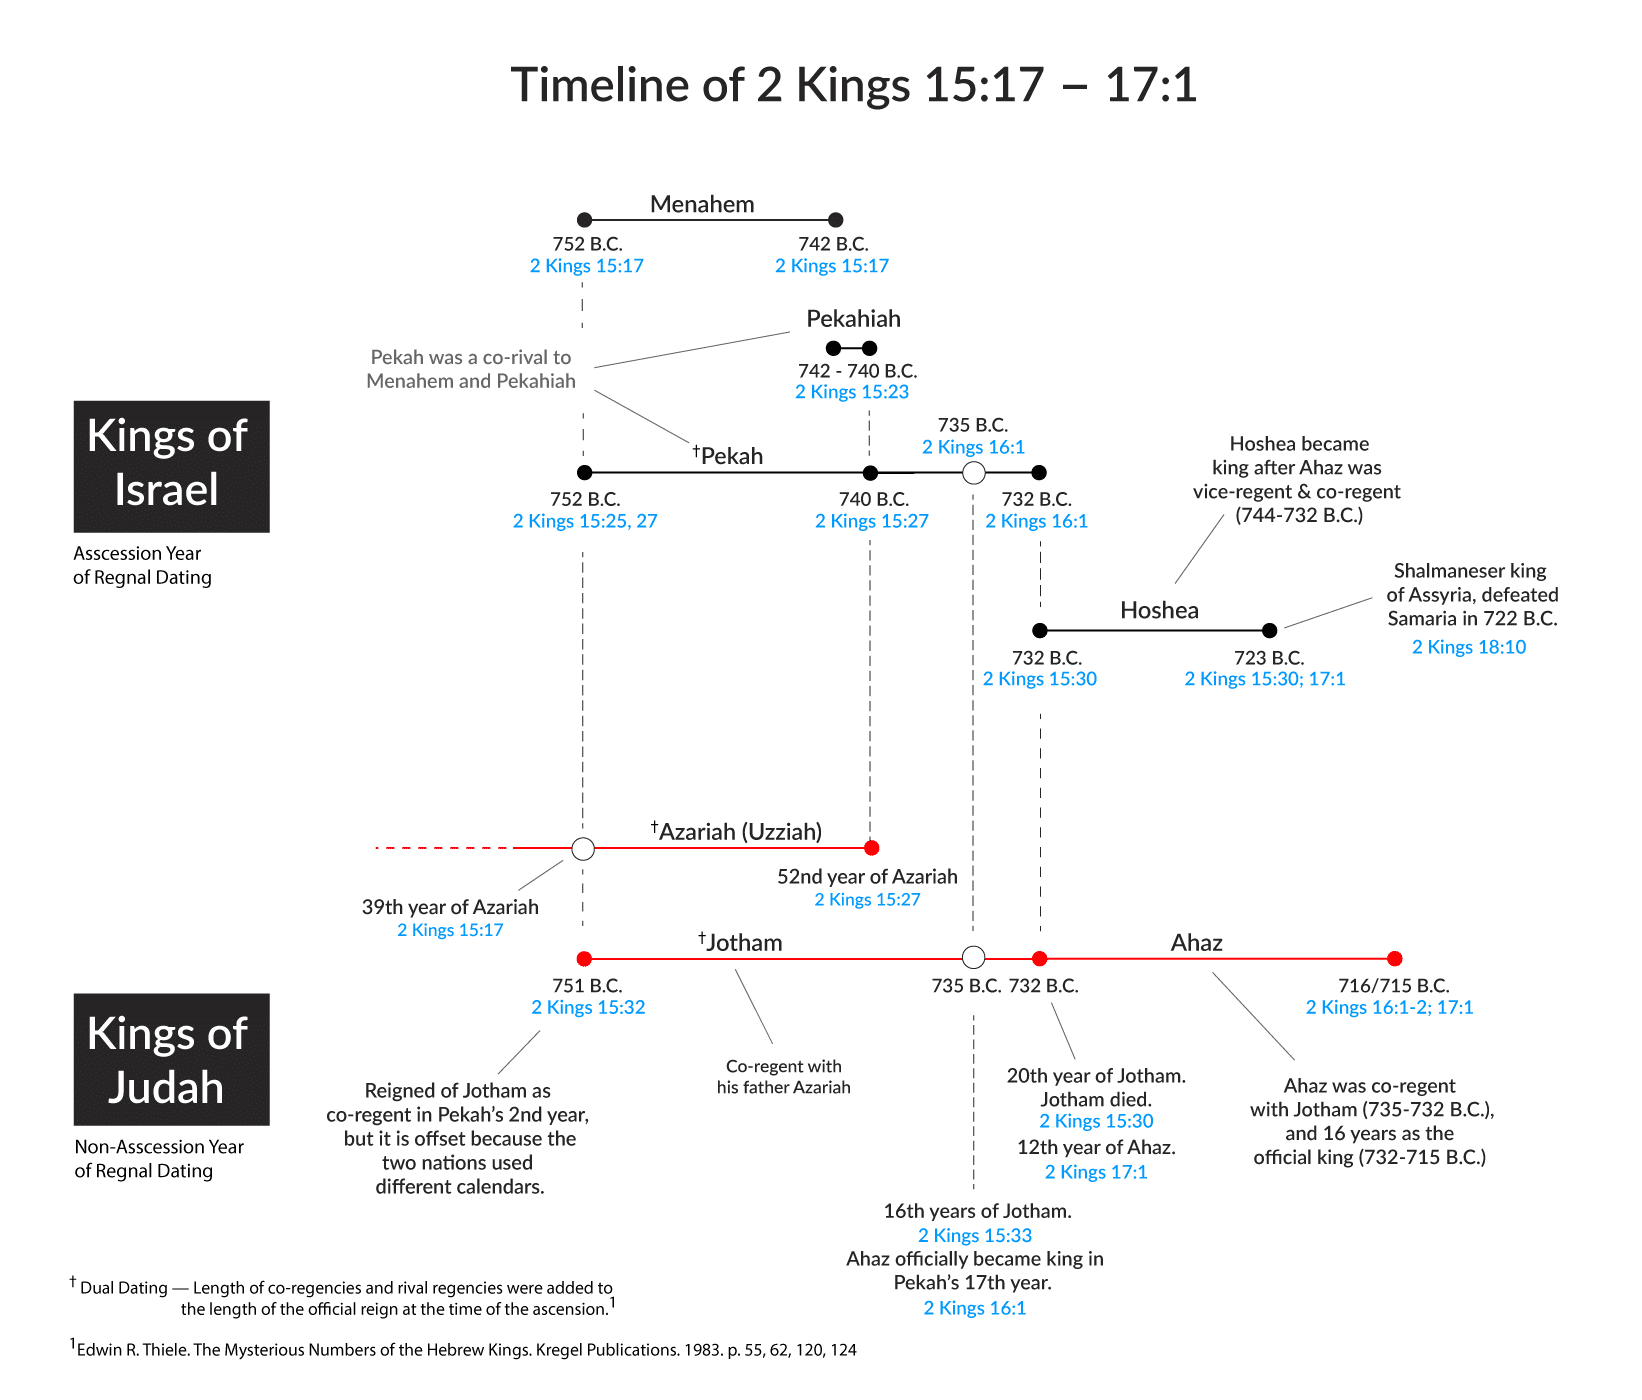 Timeline of the Kings Reigns in 2 Kings 15 - 17